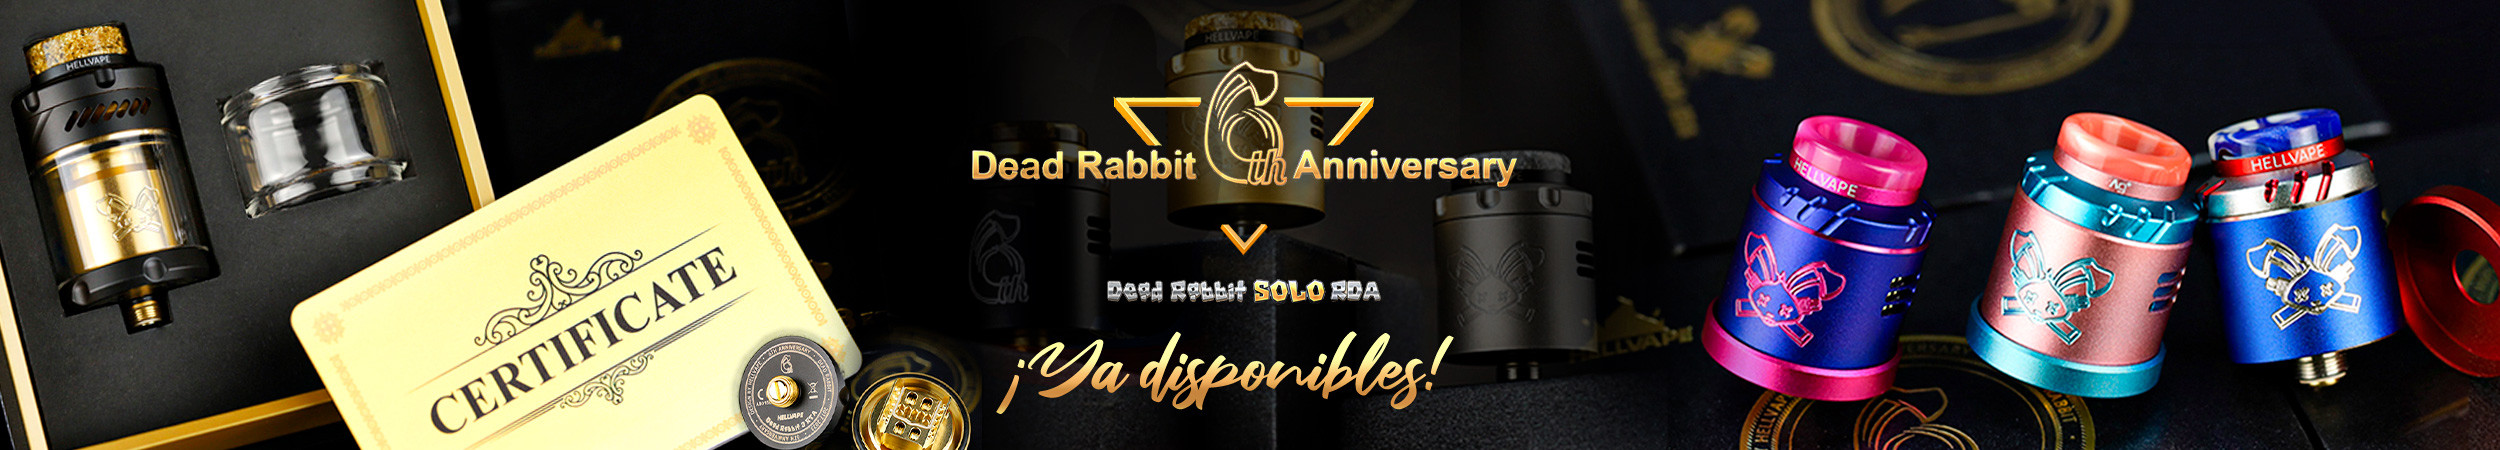 Dead rabbit Anniversary